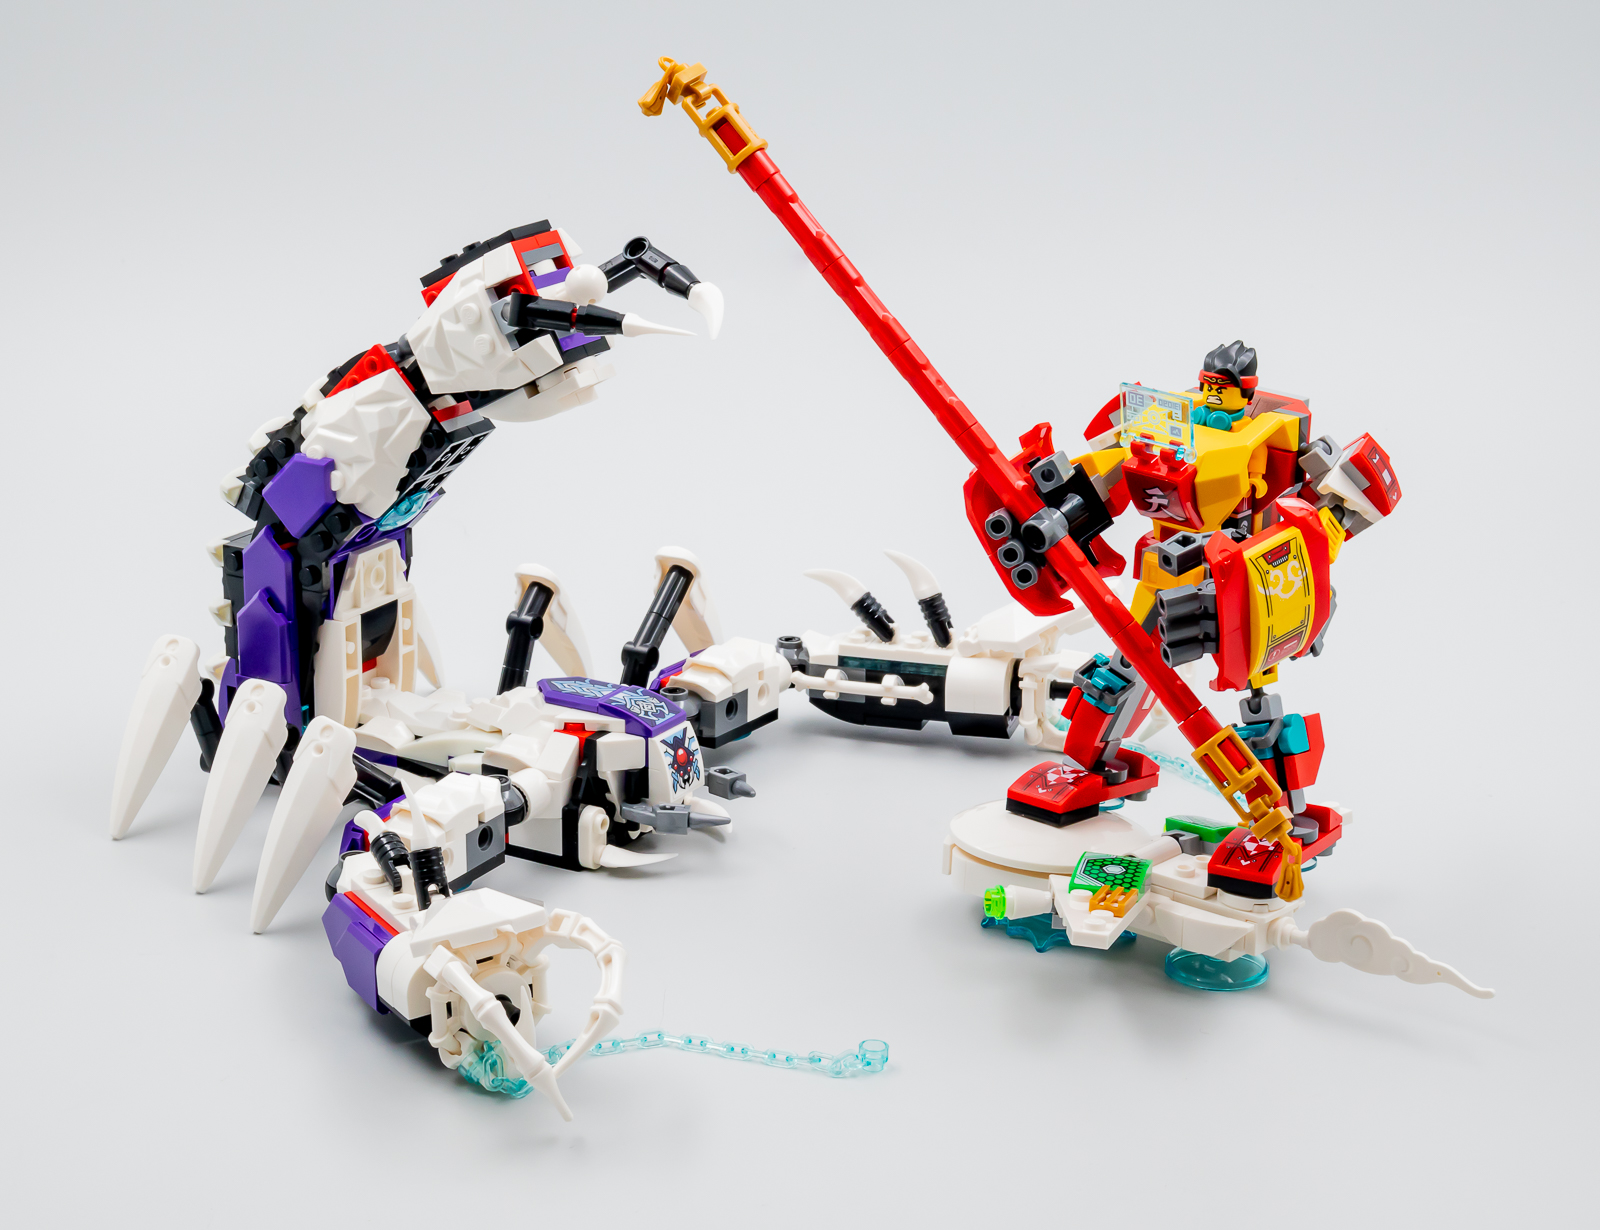 ▻ LEGO Monkie Kid - HOTH BRICKS